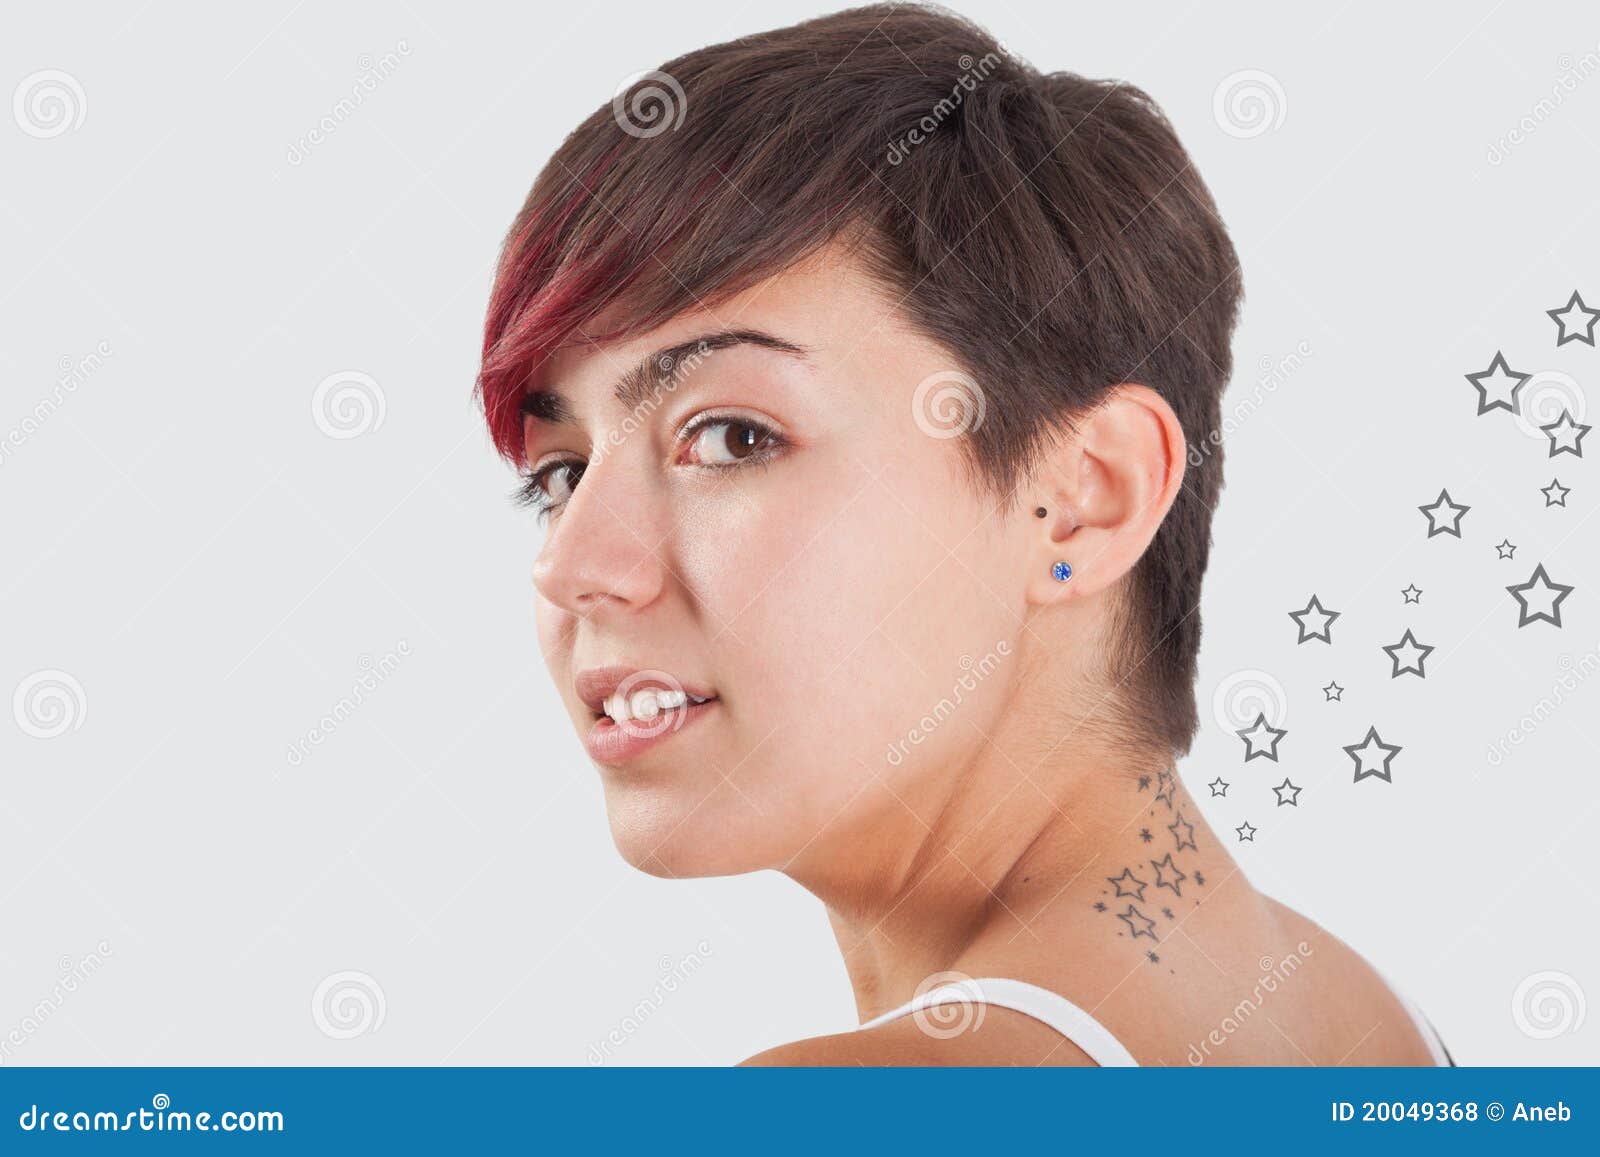 Star Tattoos  Star face tattoo, Face tattoos, Face tattoos for women